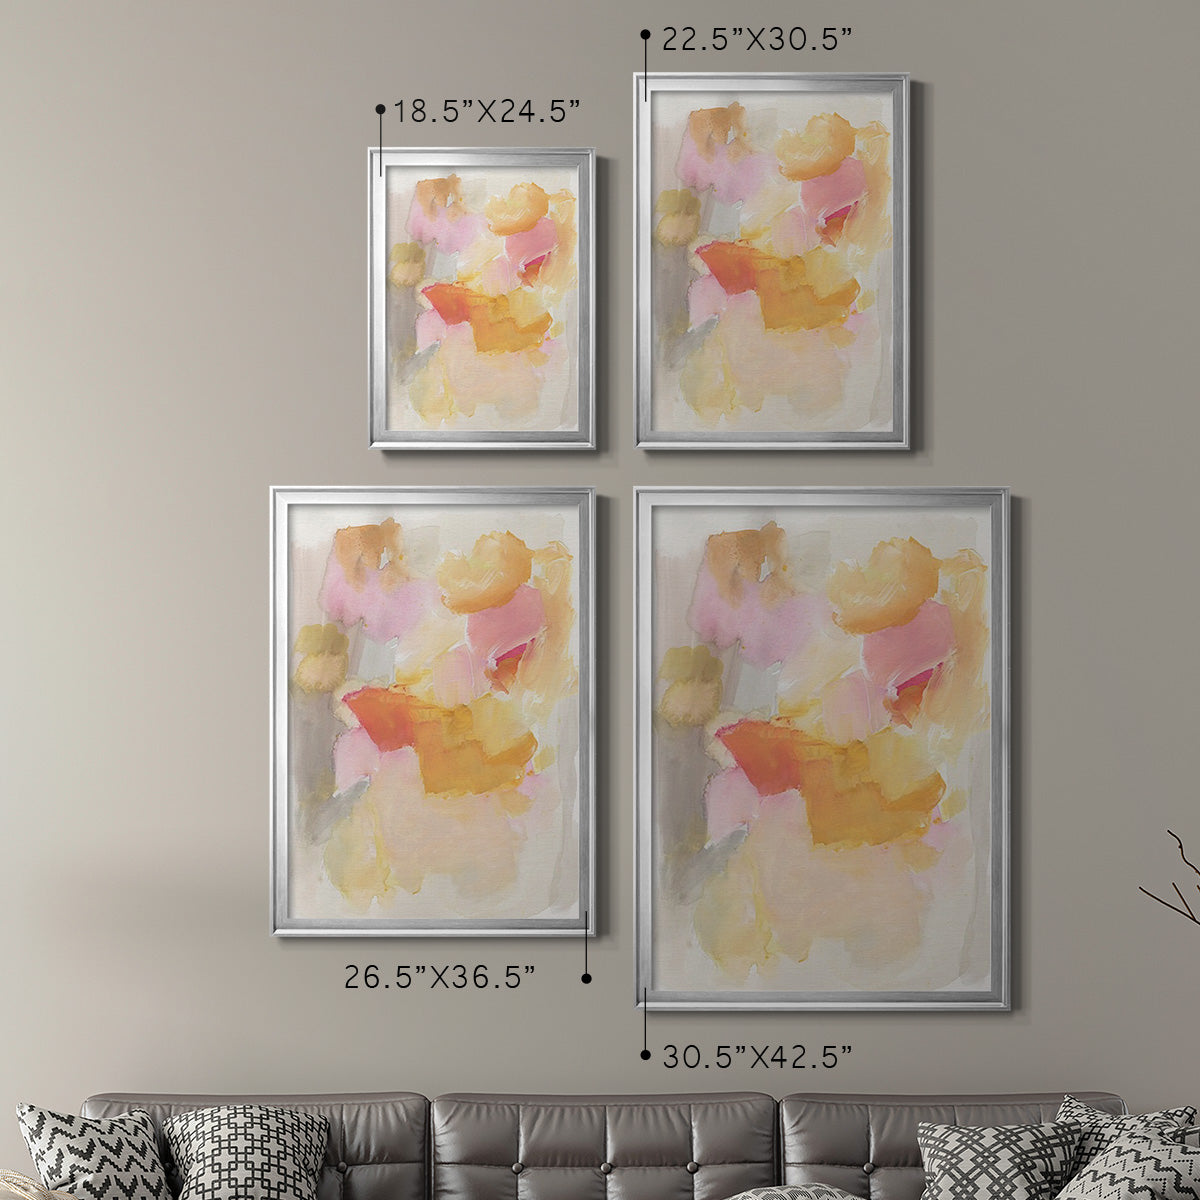 Warm Petals I Premium Framed Print - Ready to Hang